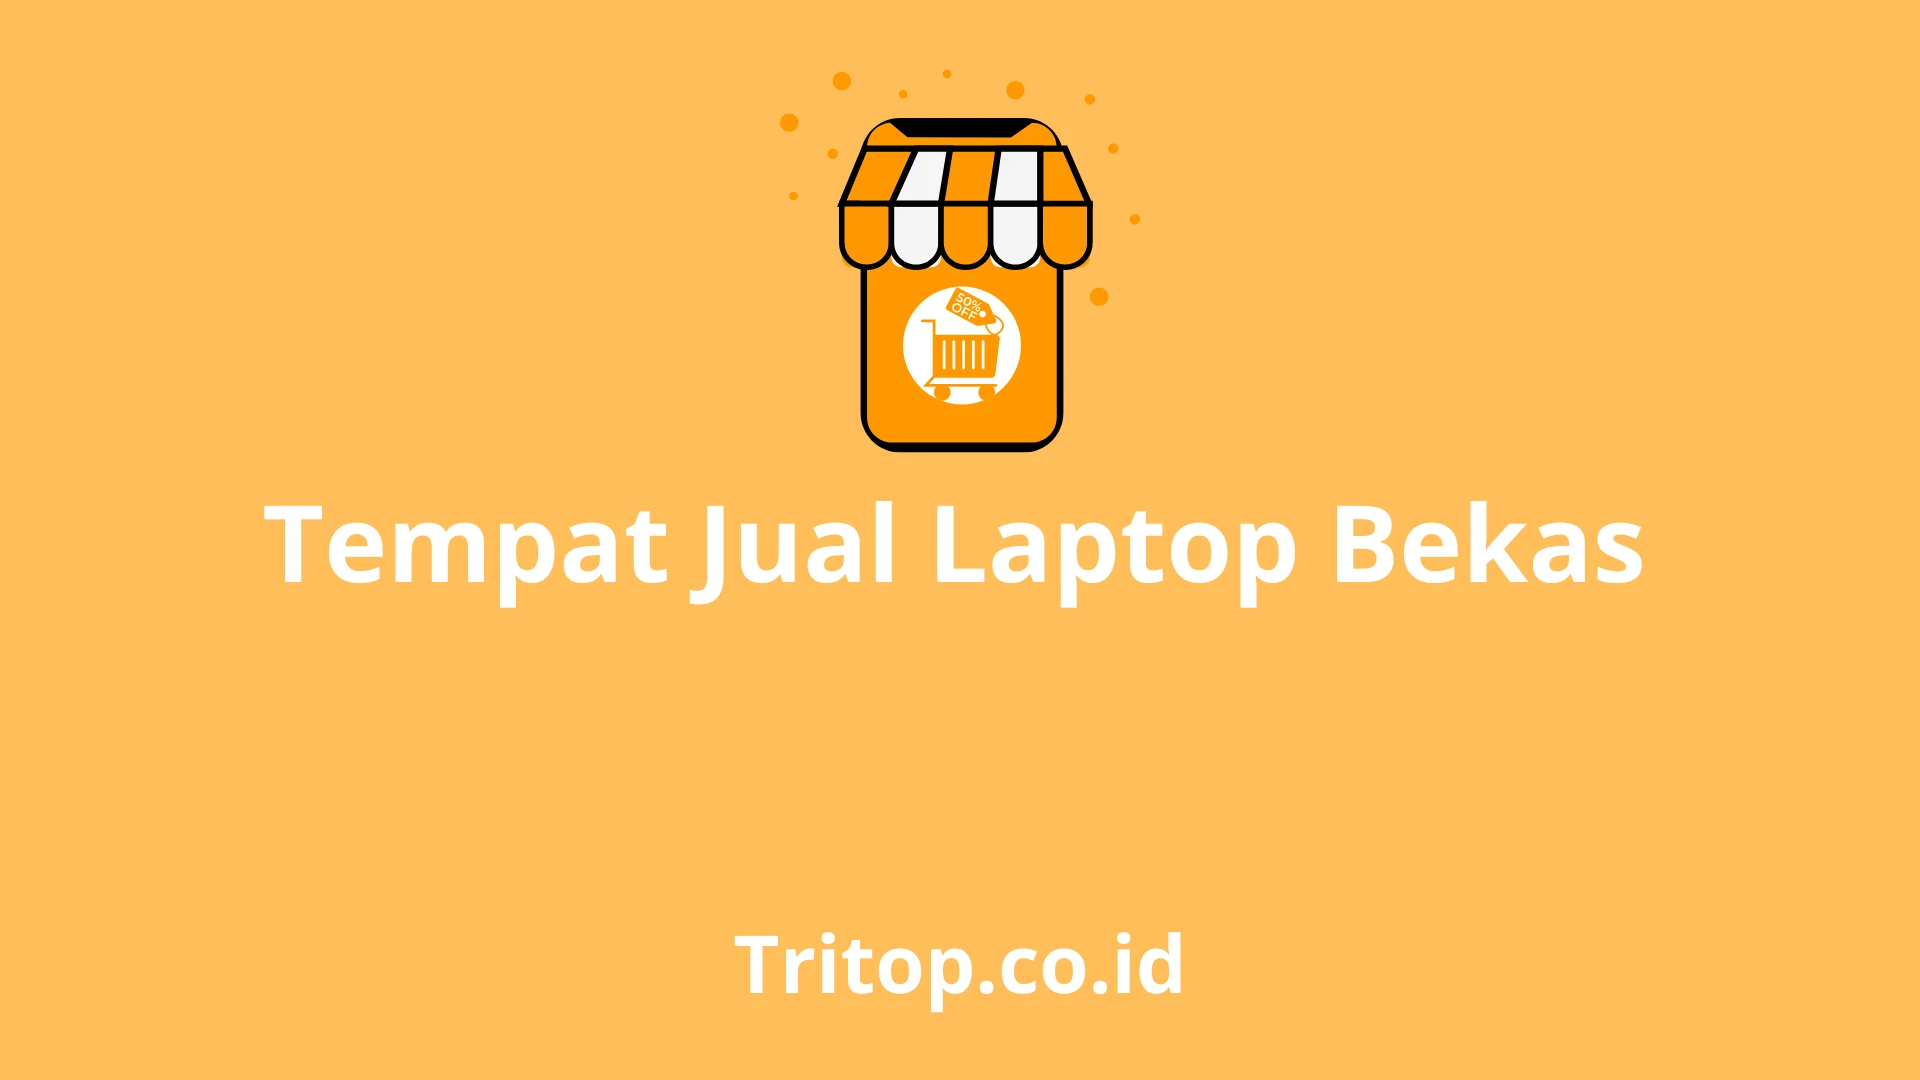 Tempat Jual Laptop Bekas tritop.co.id